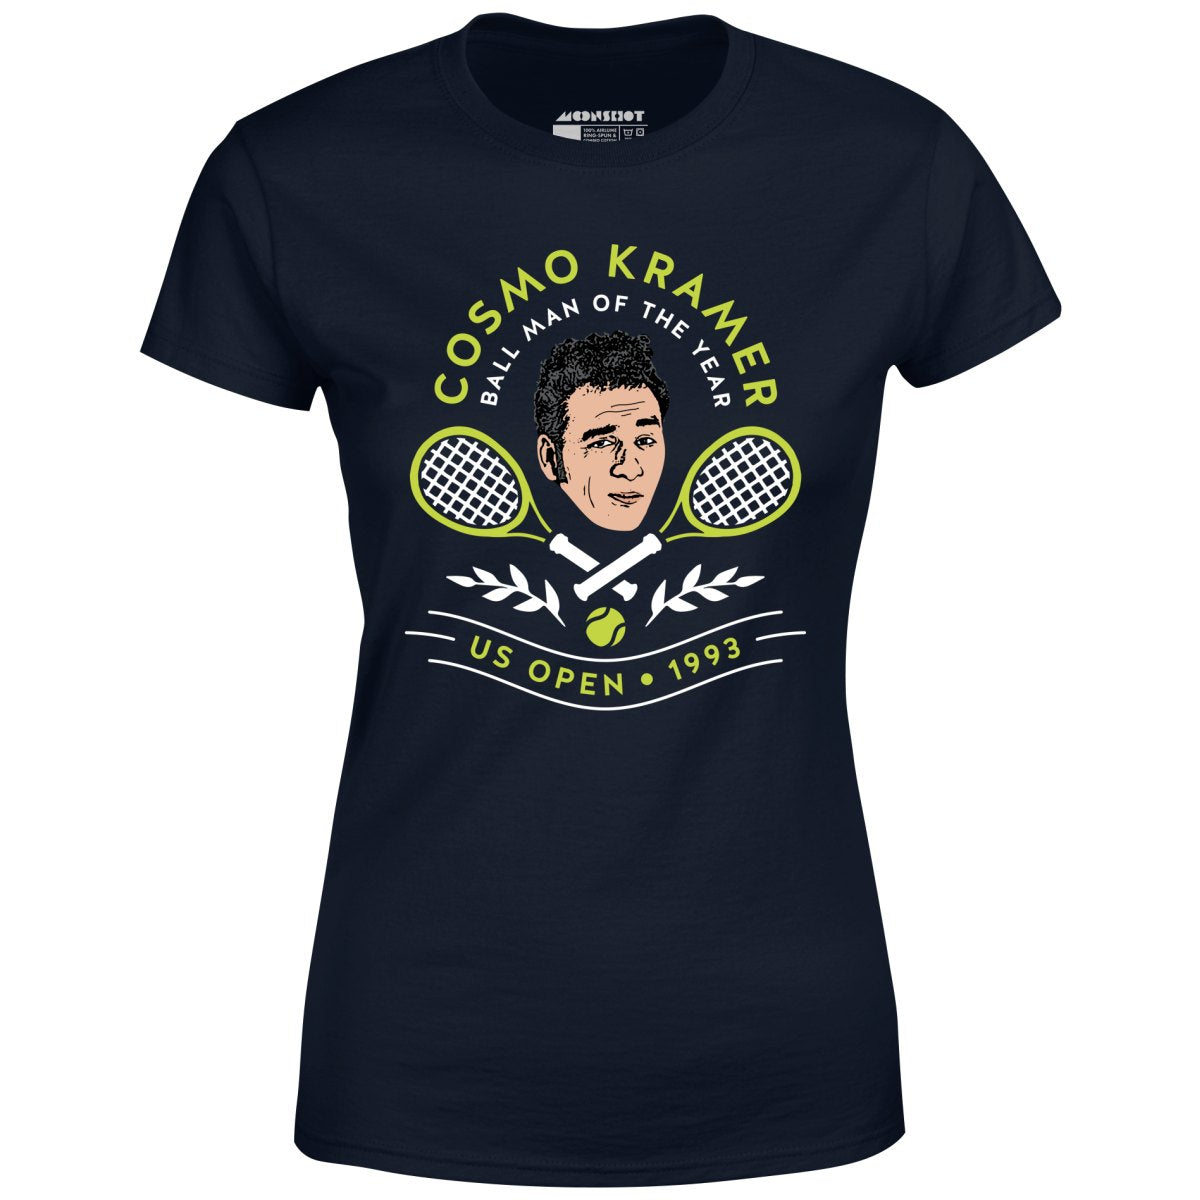 Cosmo Kramer - Ball Man of The Year - Women's T-Shirt